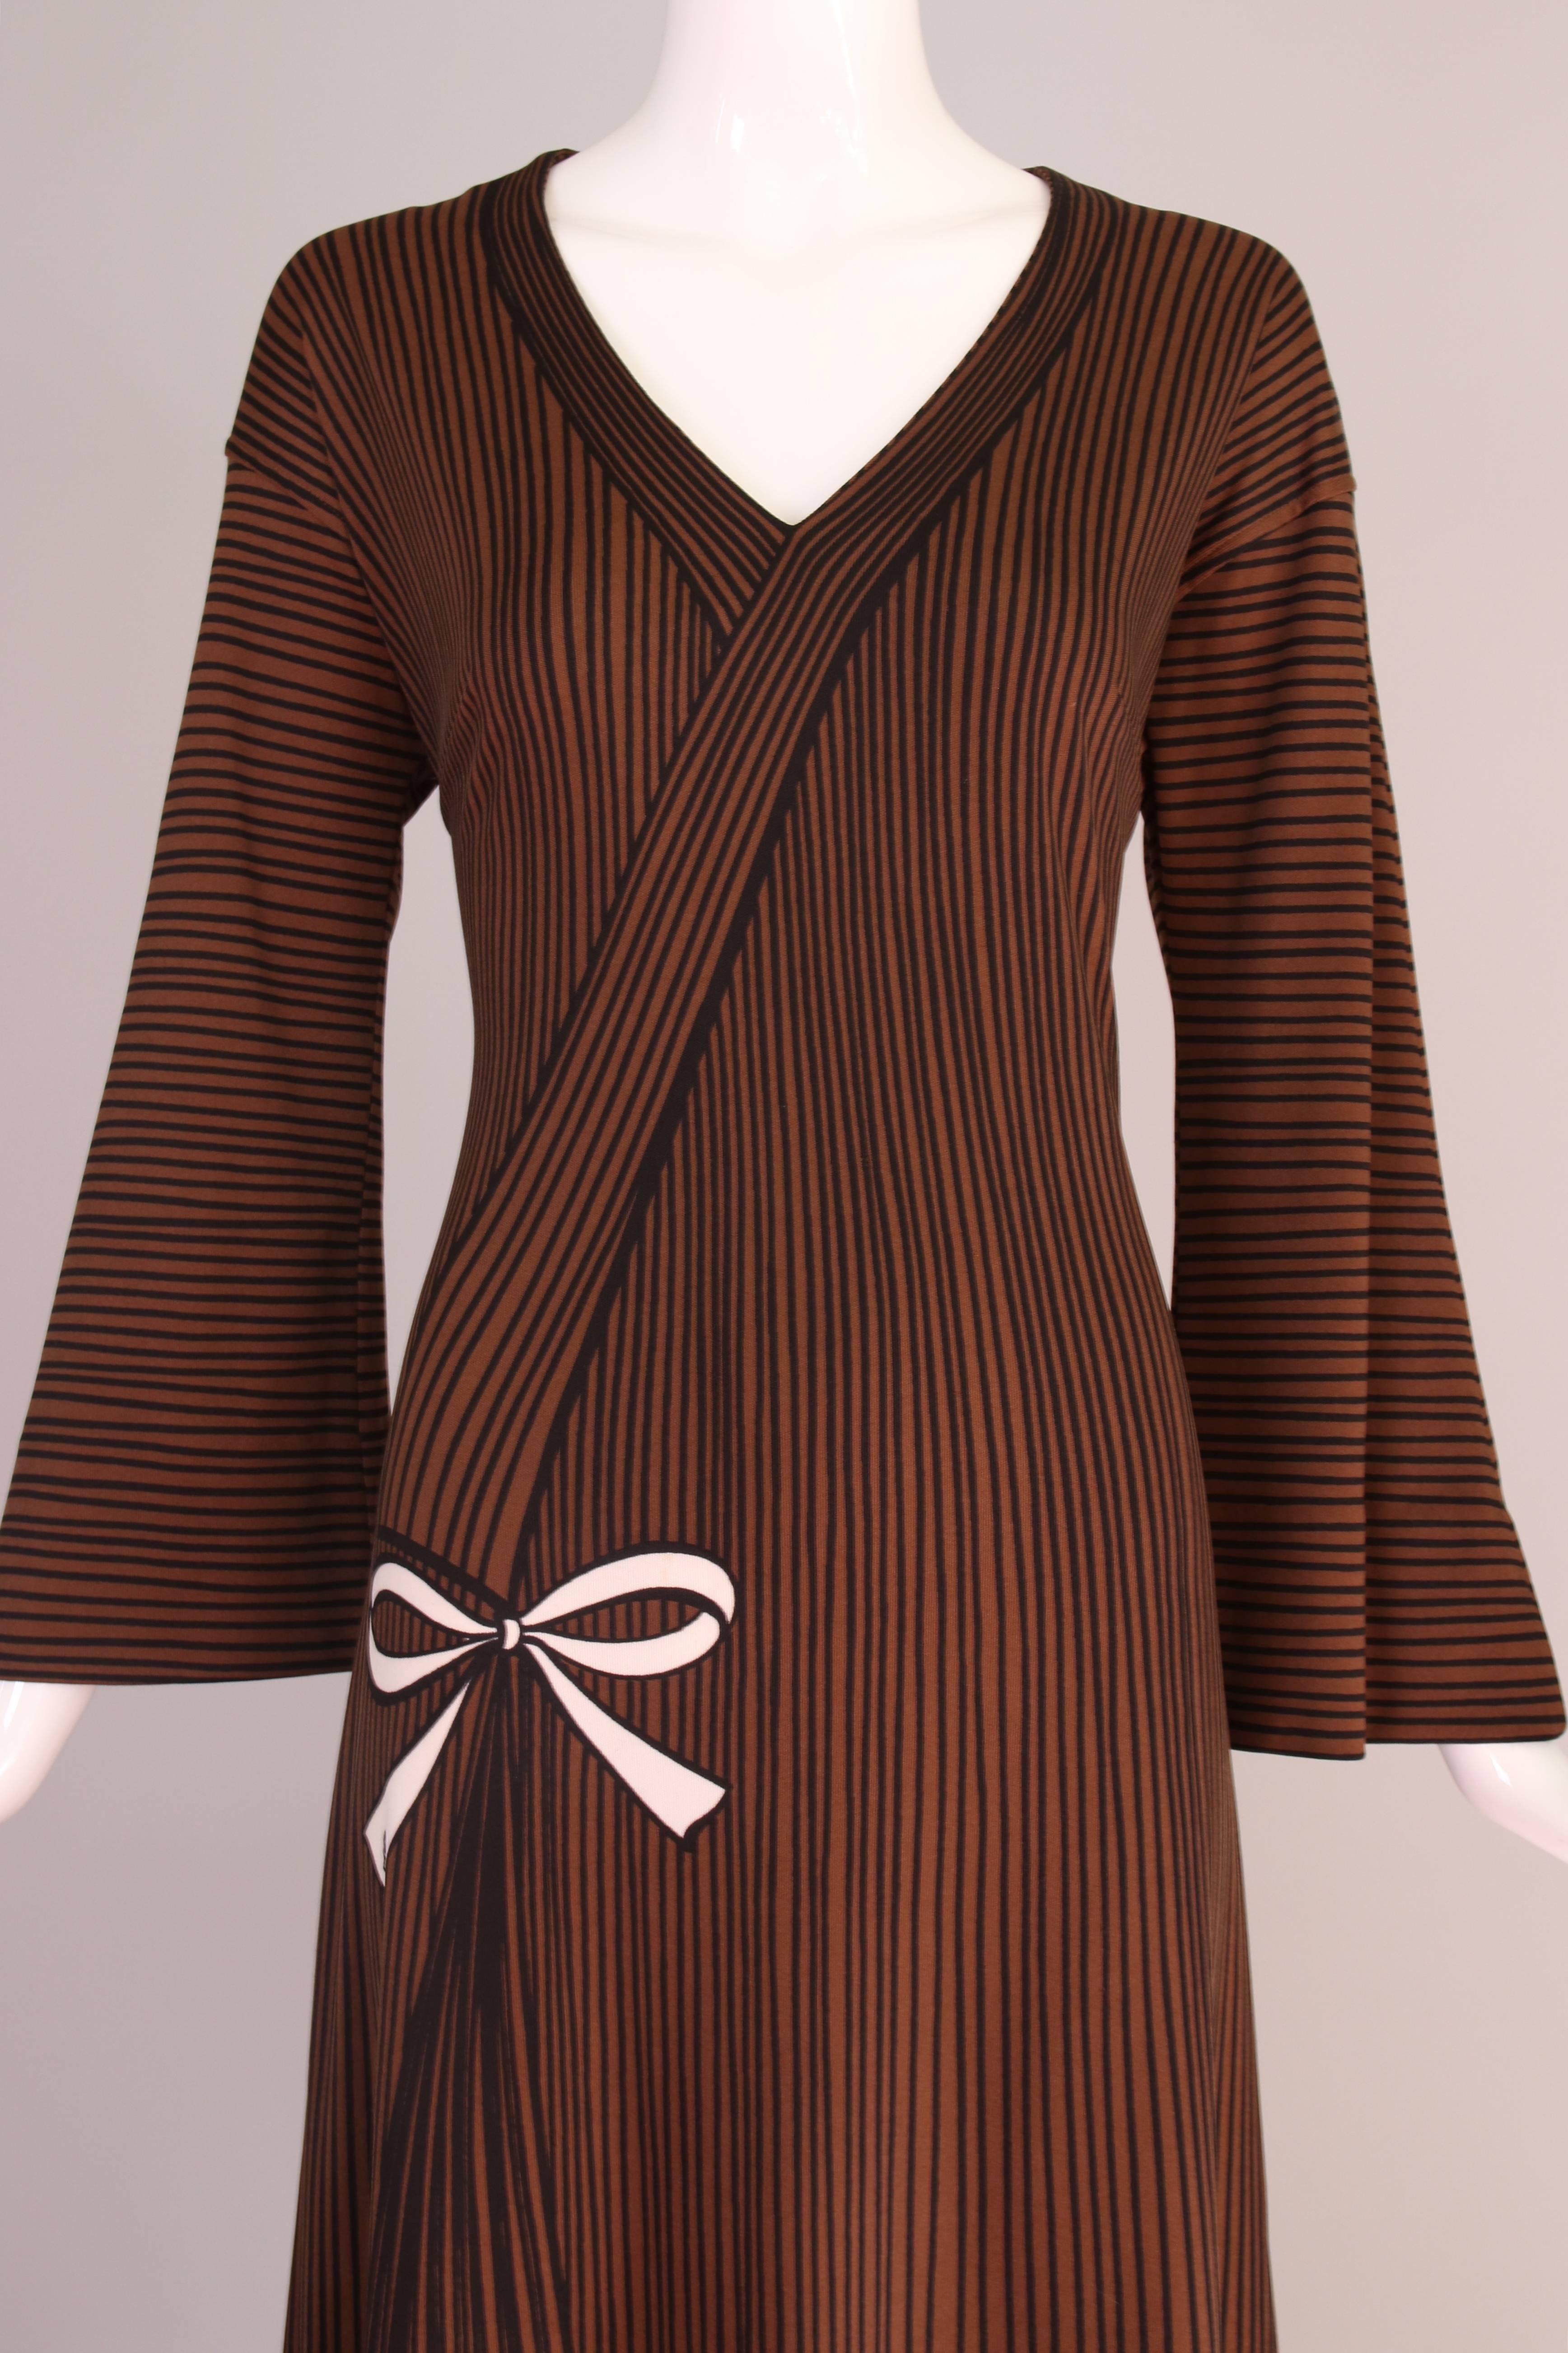 Women's 1970's Roberta di Camerino Printed Trompe L'Oeil Jersey Dress